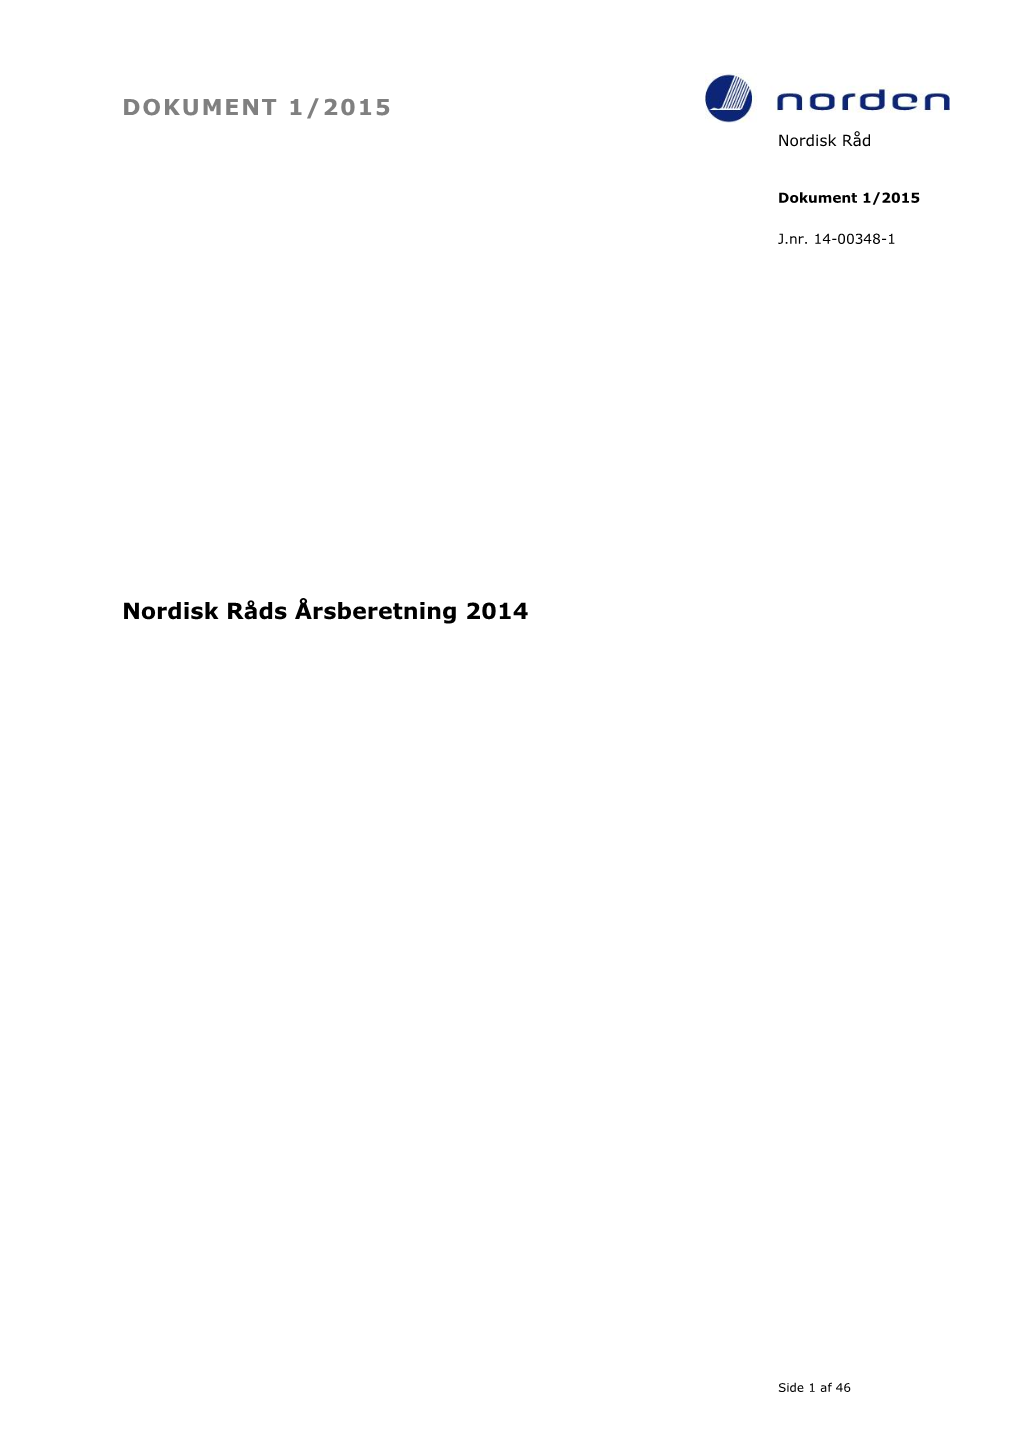 Nordisk Råds Årsberetning 2014, Dokument 1